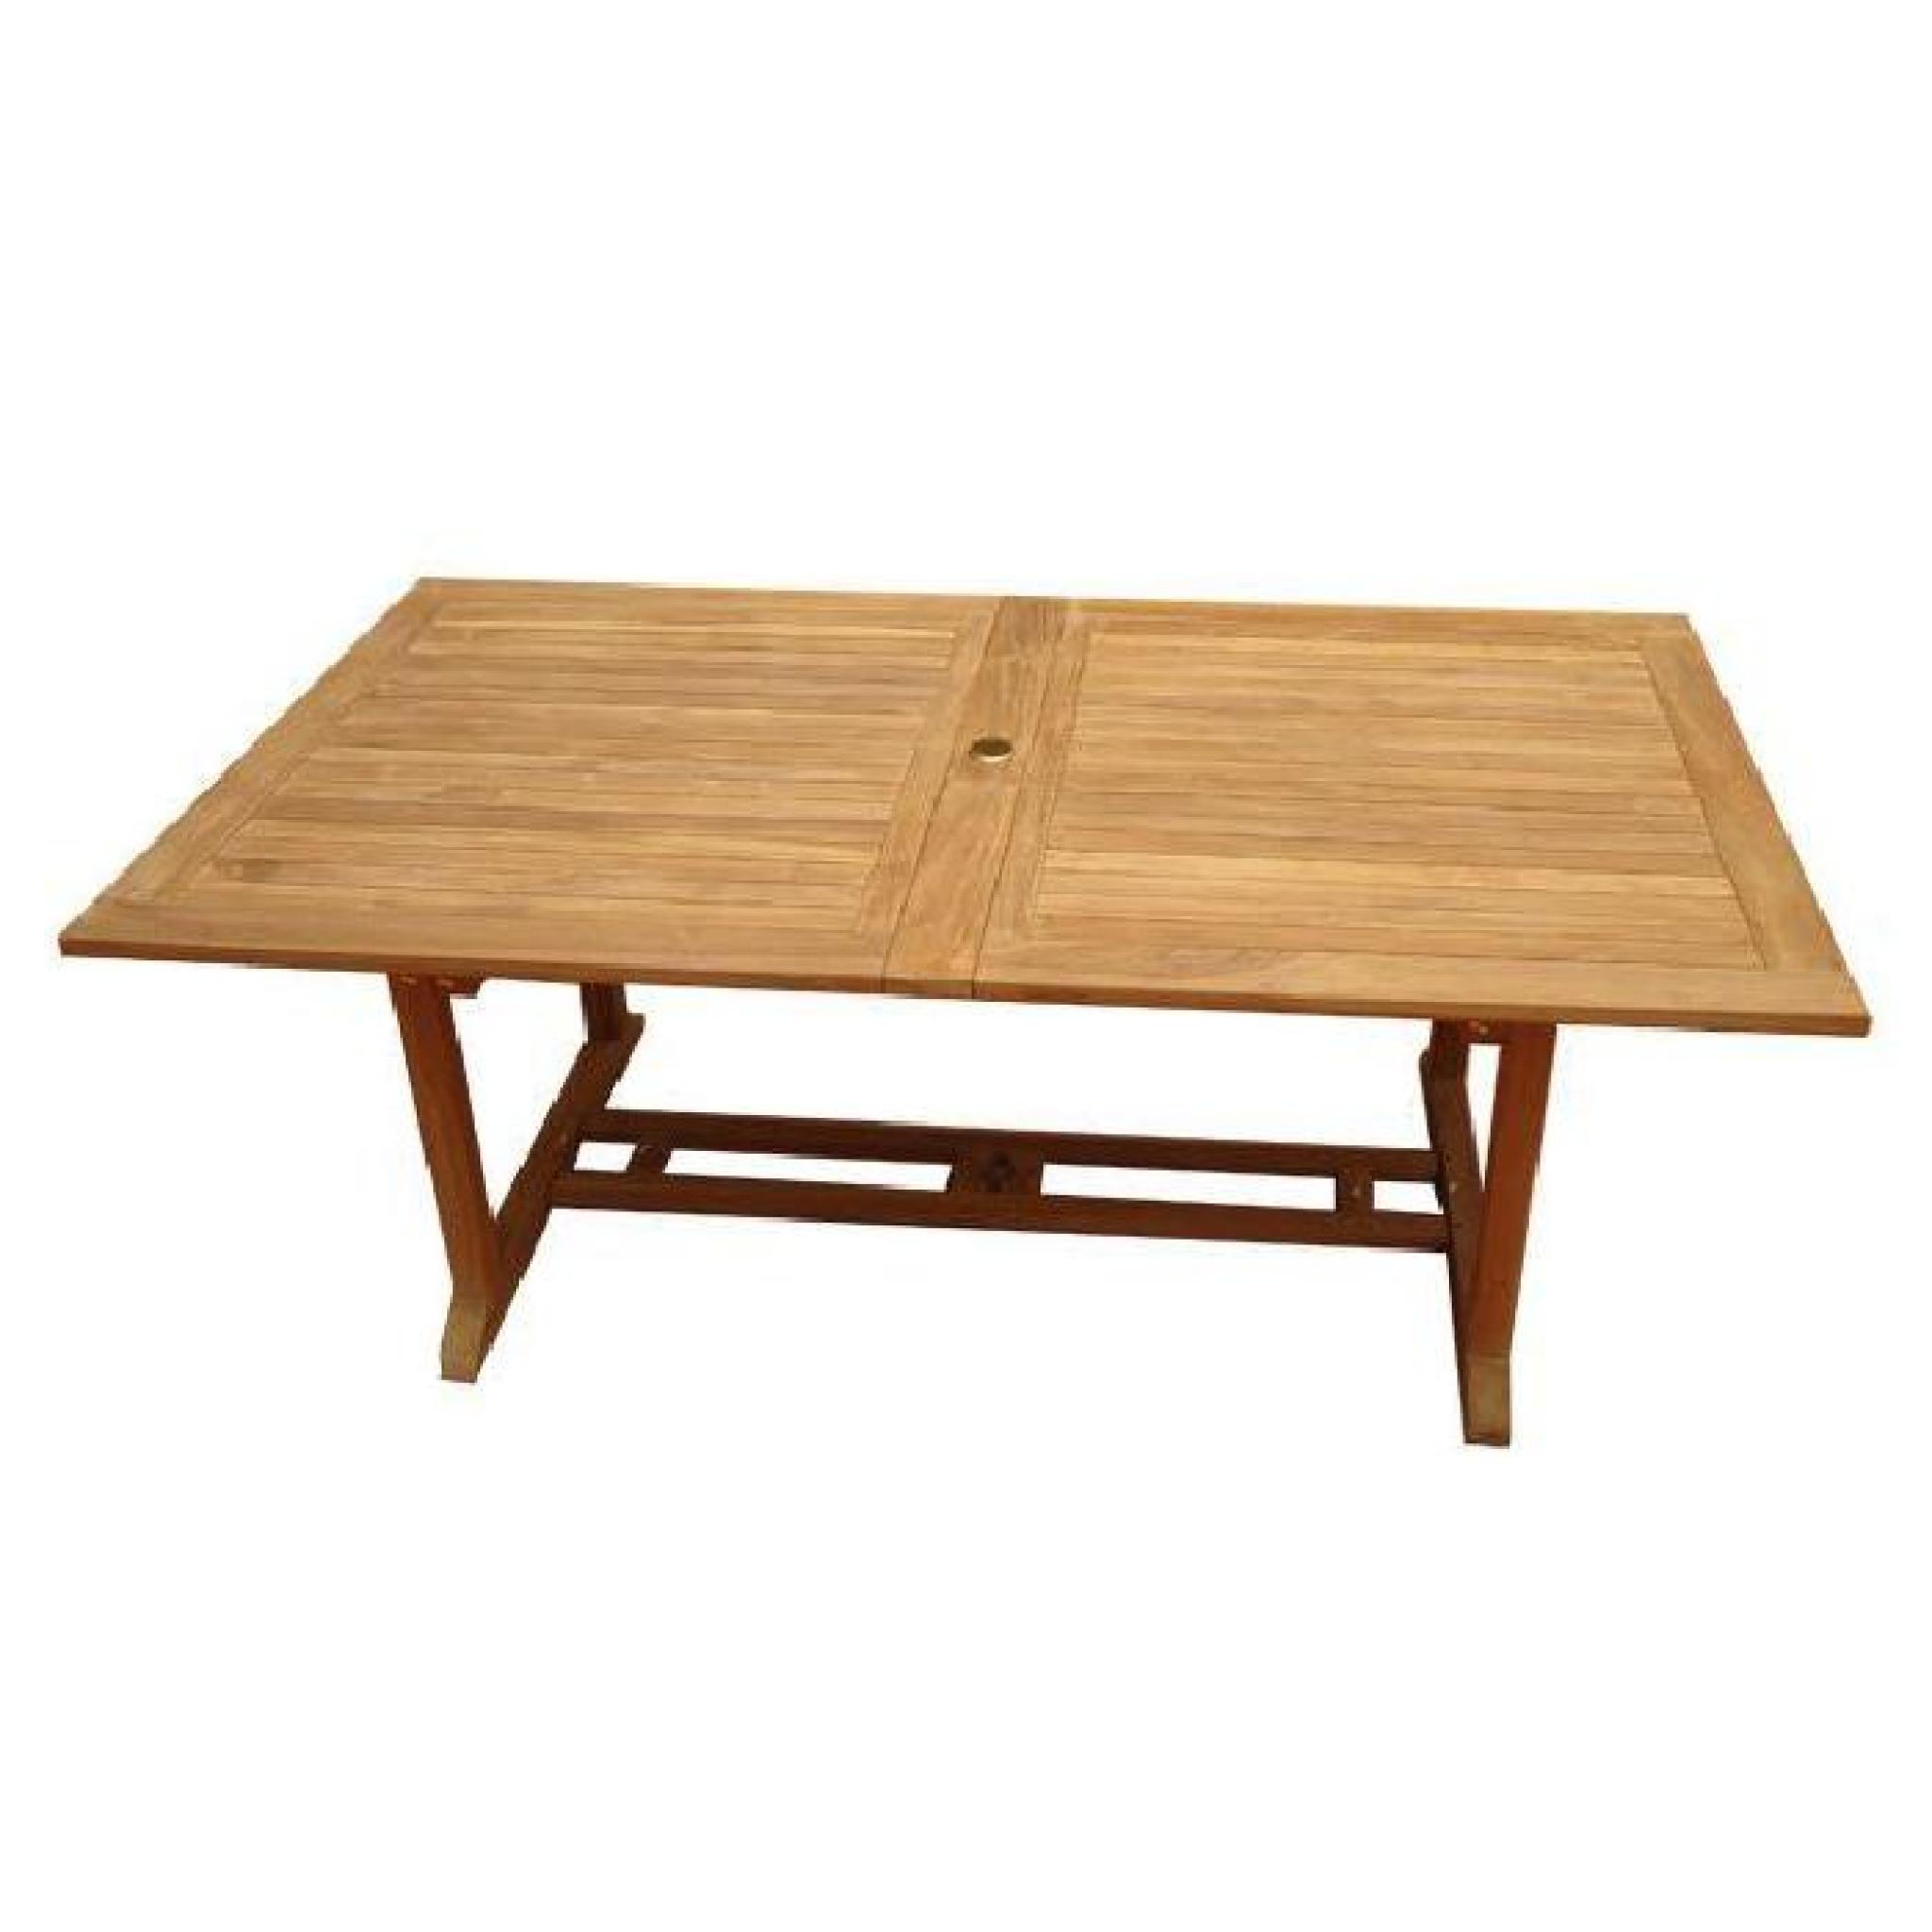 Table extensible rectangulaire en teck Ecograde Milan 180/240x100 cm pas cher